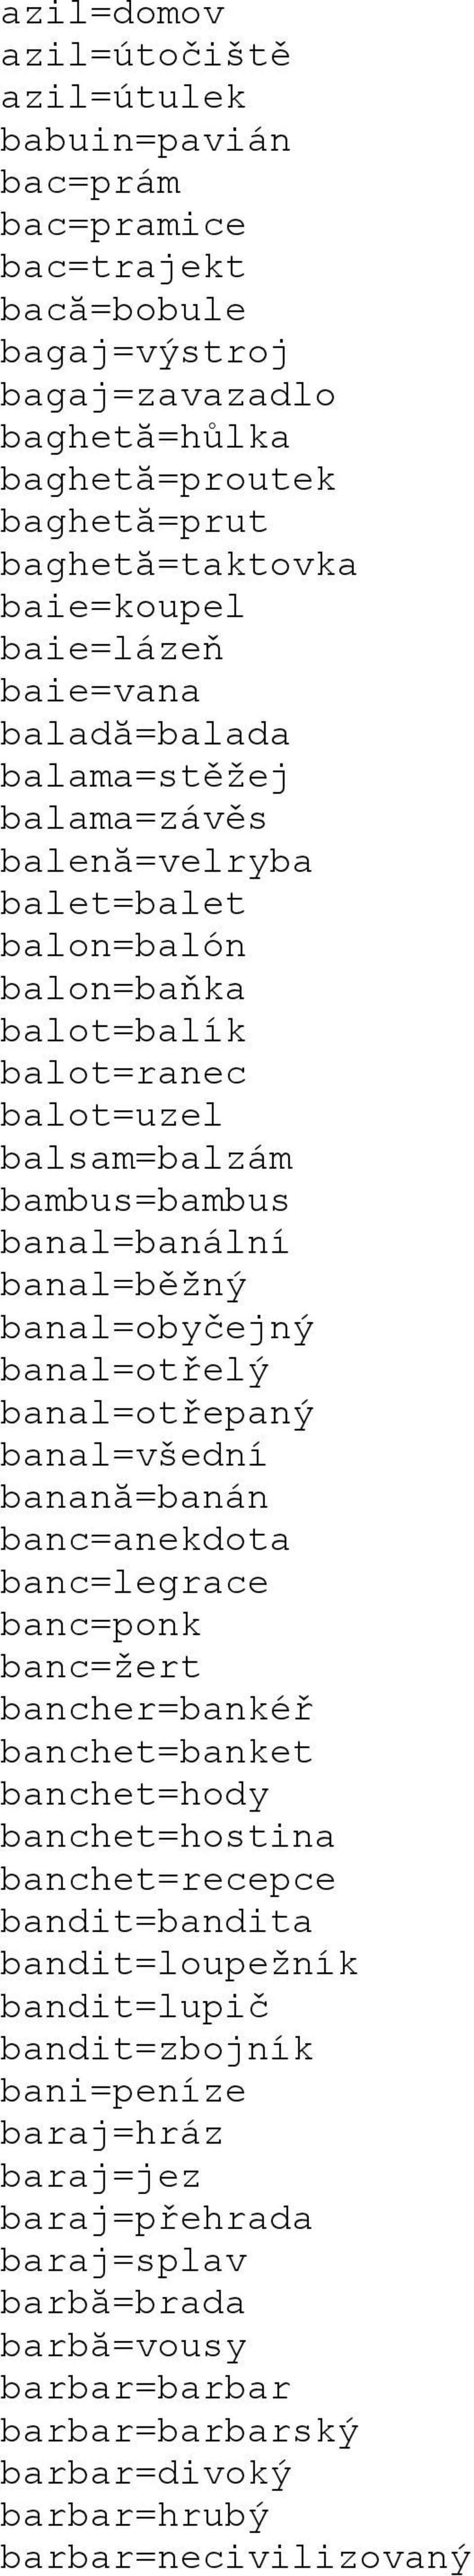 banal=běžný banal=obyčejný banal=otřelý banal=otřepaný banal=všední banană=banán banc=anekdota banc=legrace banc=ponk banc=žert bancher=bankéř banchet=banket banchet=hody banchet=hostina